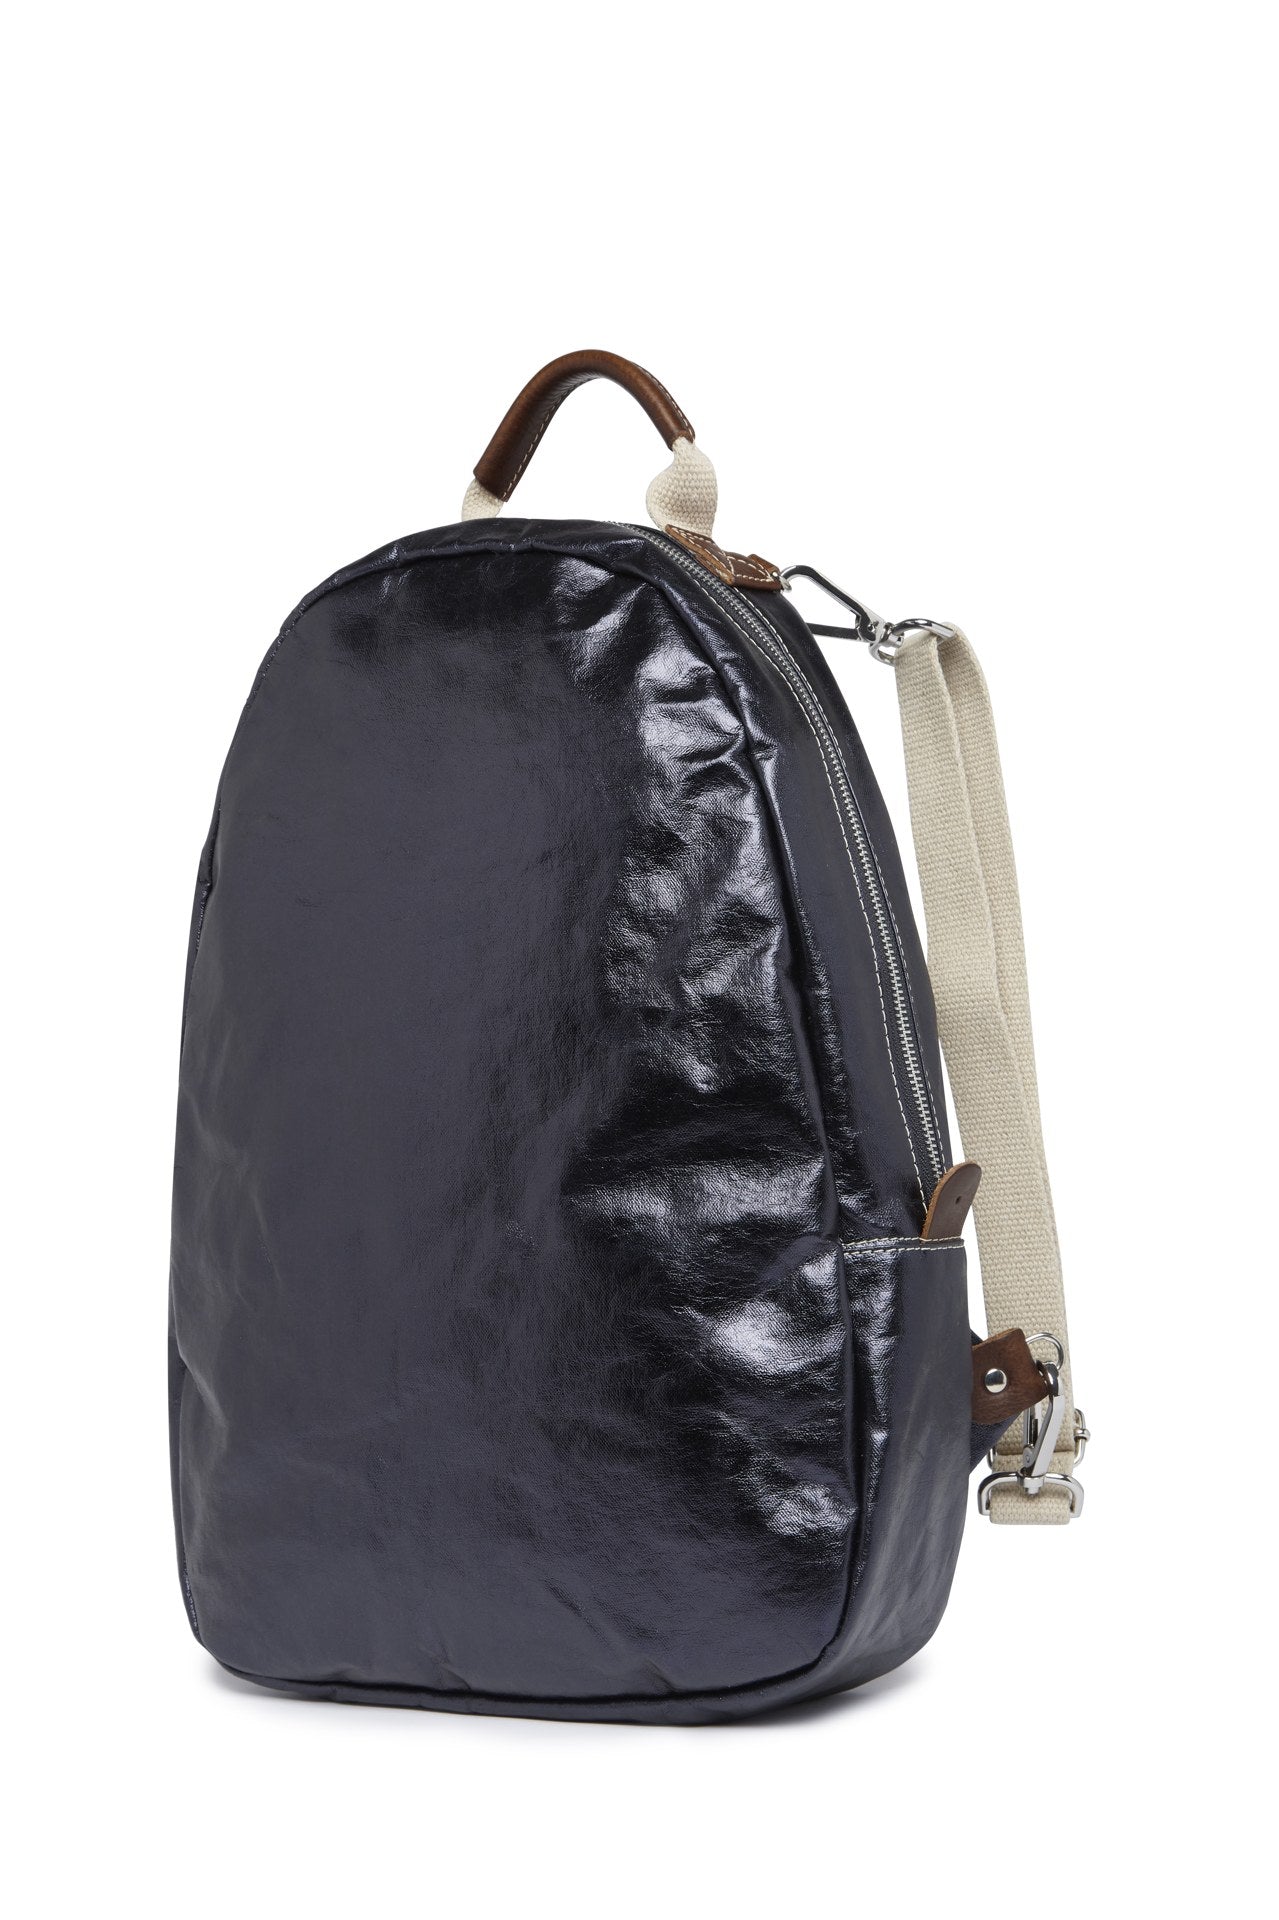 Uashmama Small Zip-Up Everyday Backpack